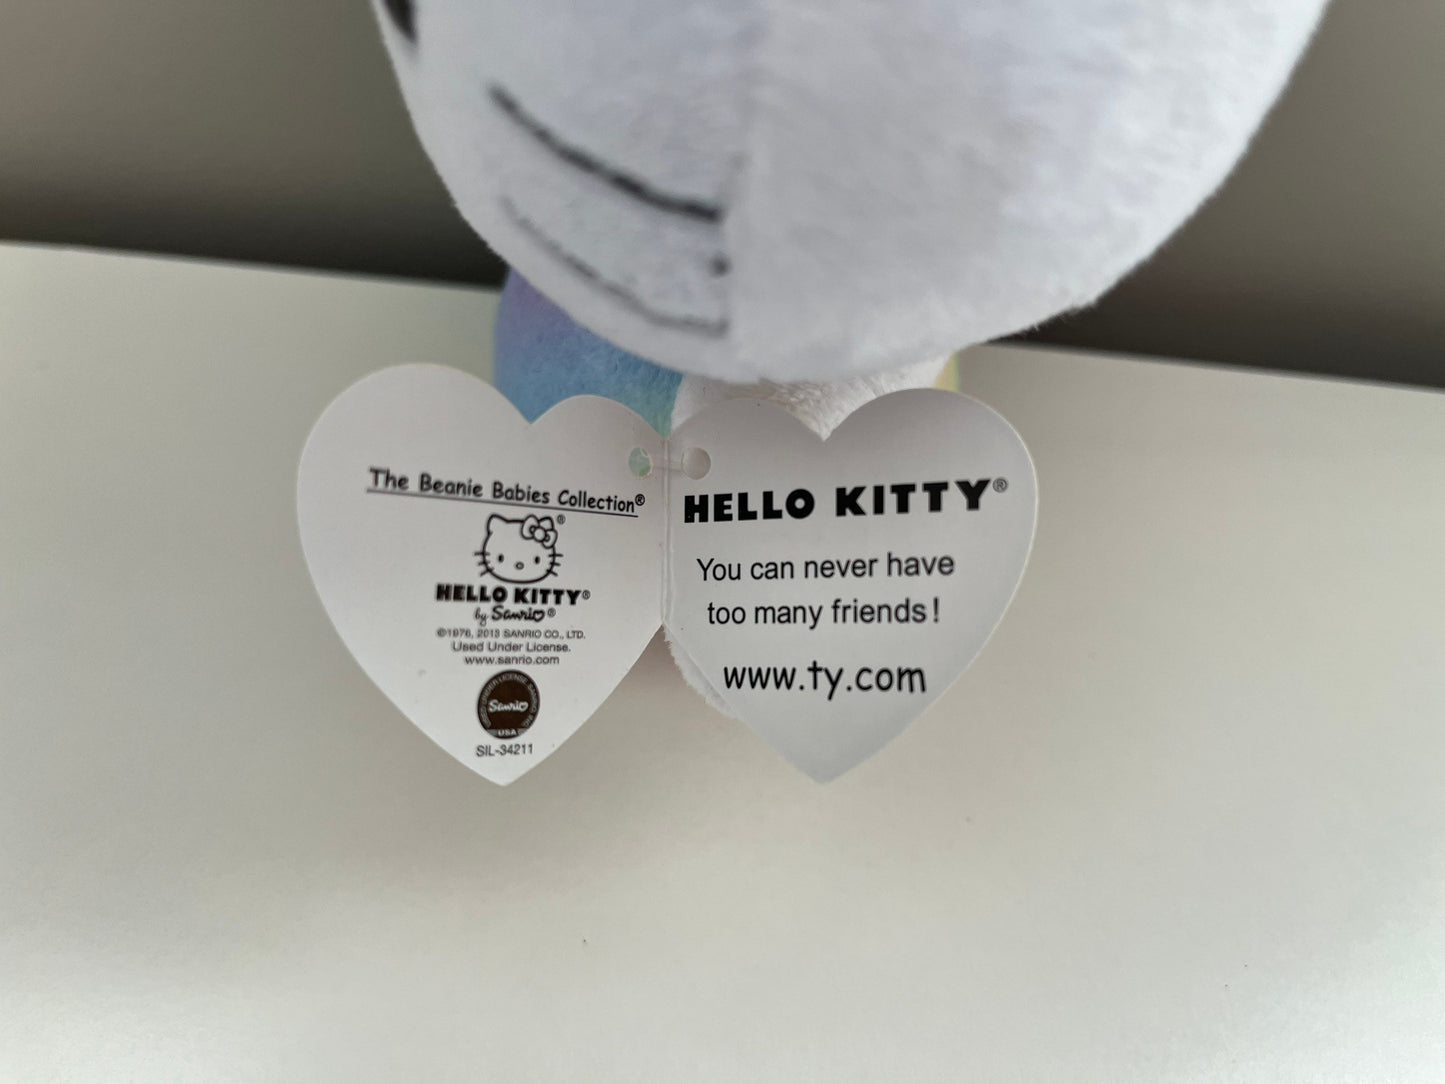 Ty Beanie Baby “Hello Kitty” Mermaid Edition (6 inch)